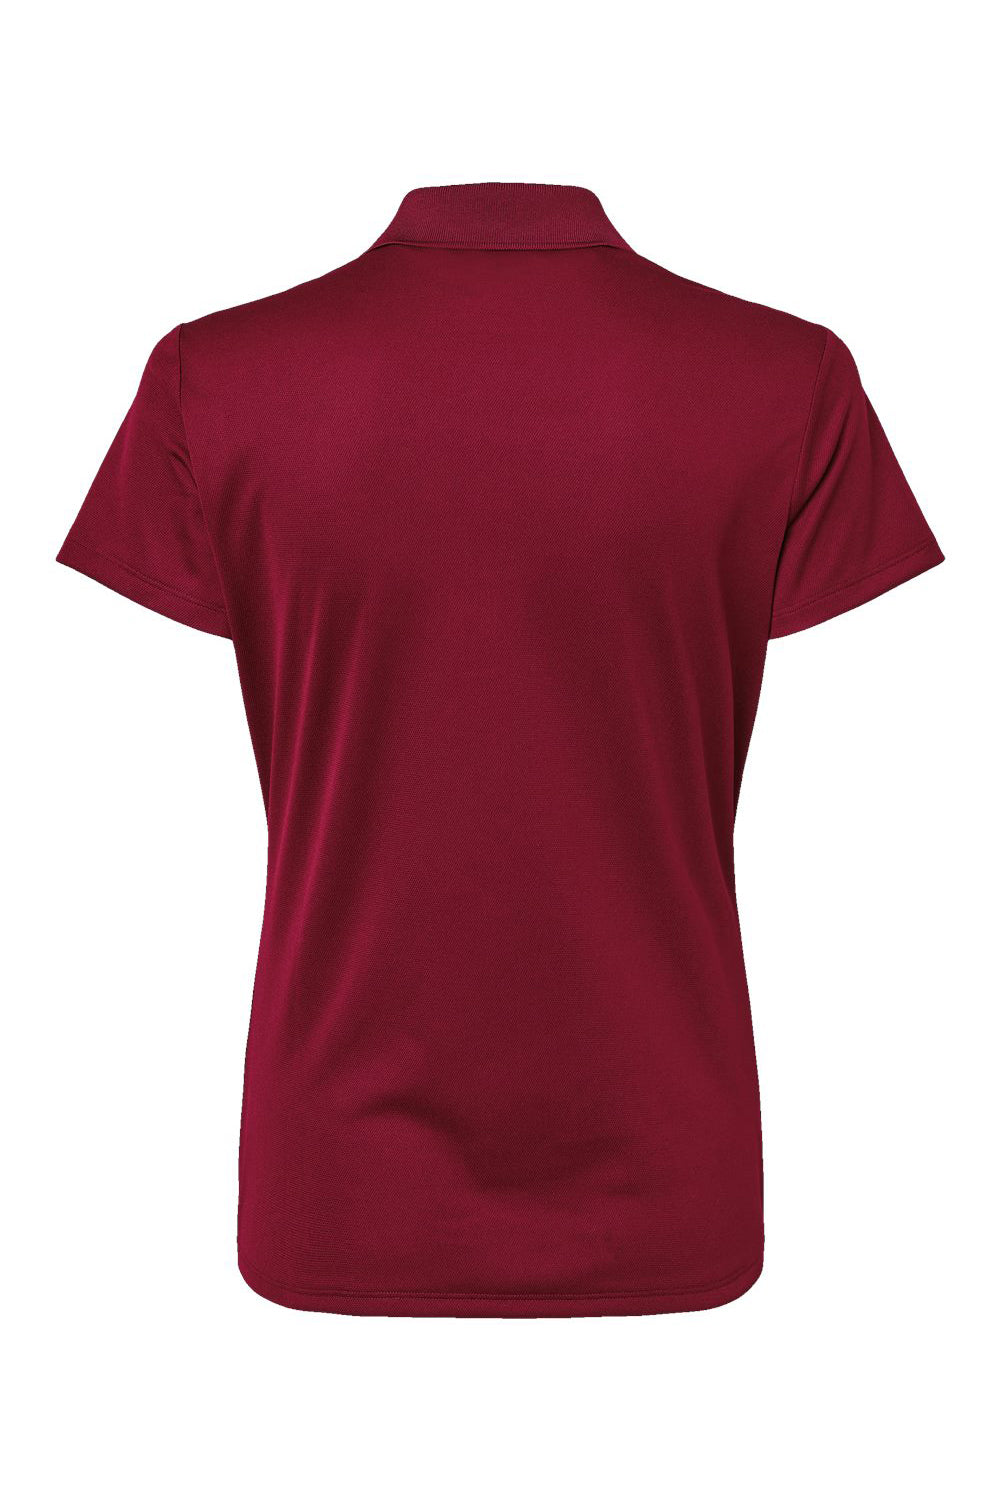 Adidas A431 Womens Basic Short Sleeve Polo Shirt Collegiate Burgundy Flat Back